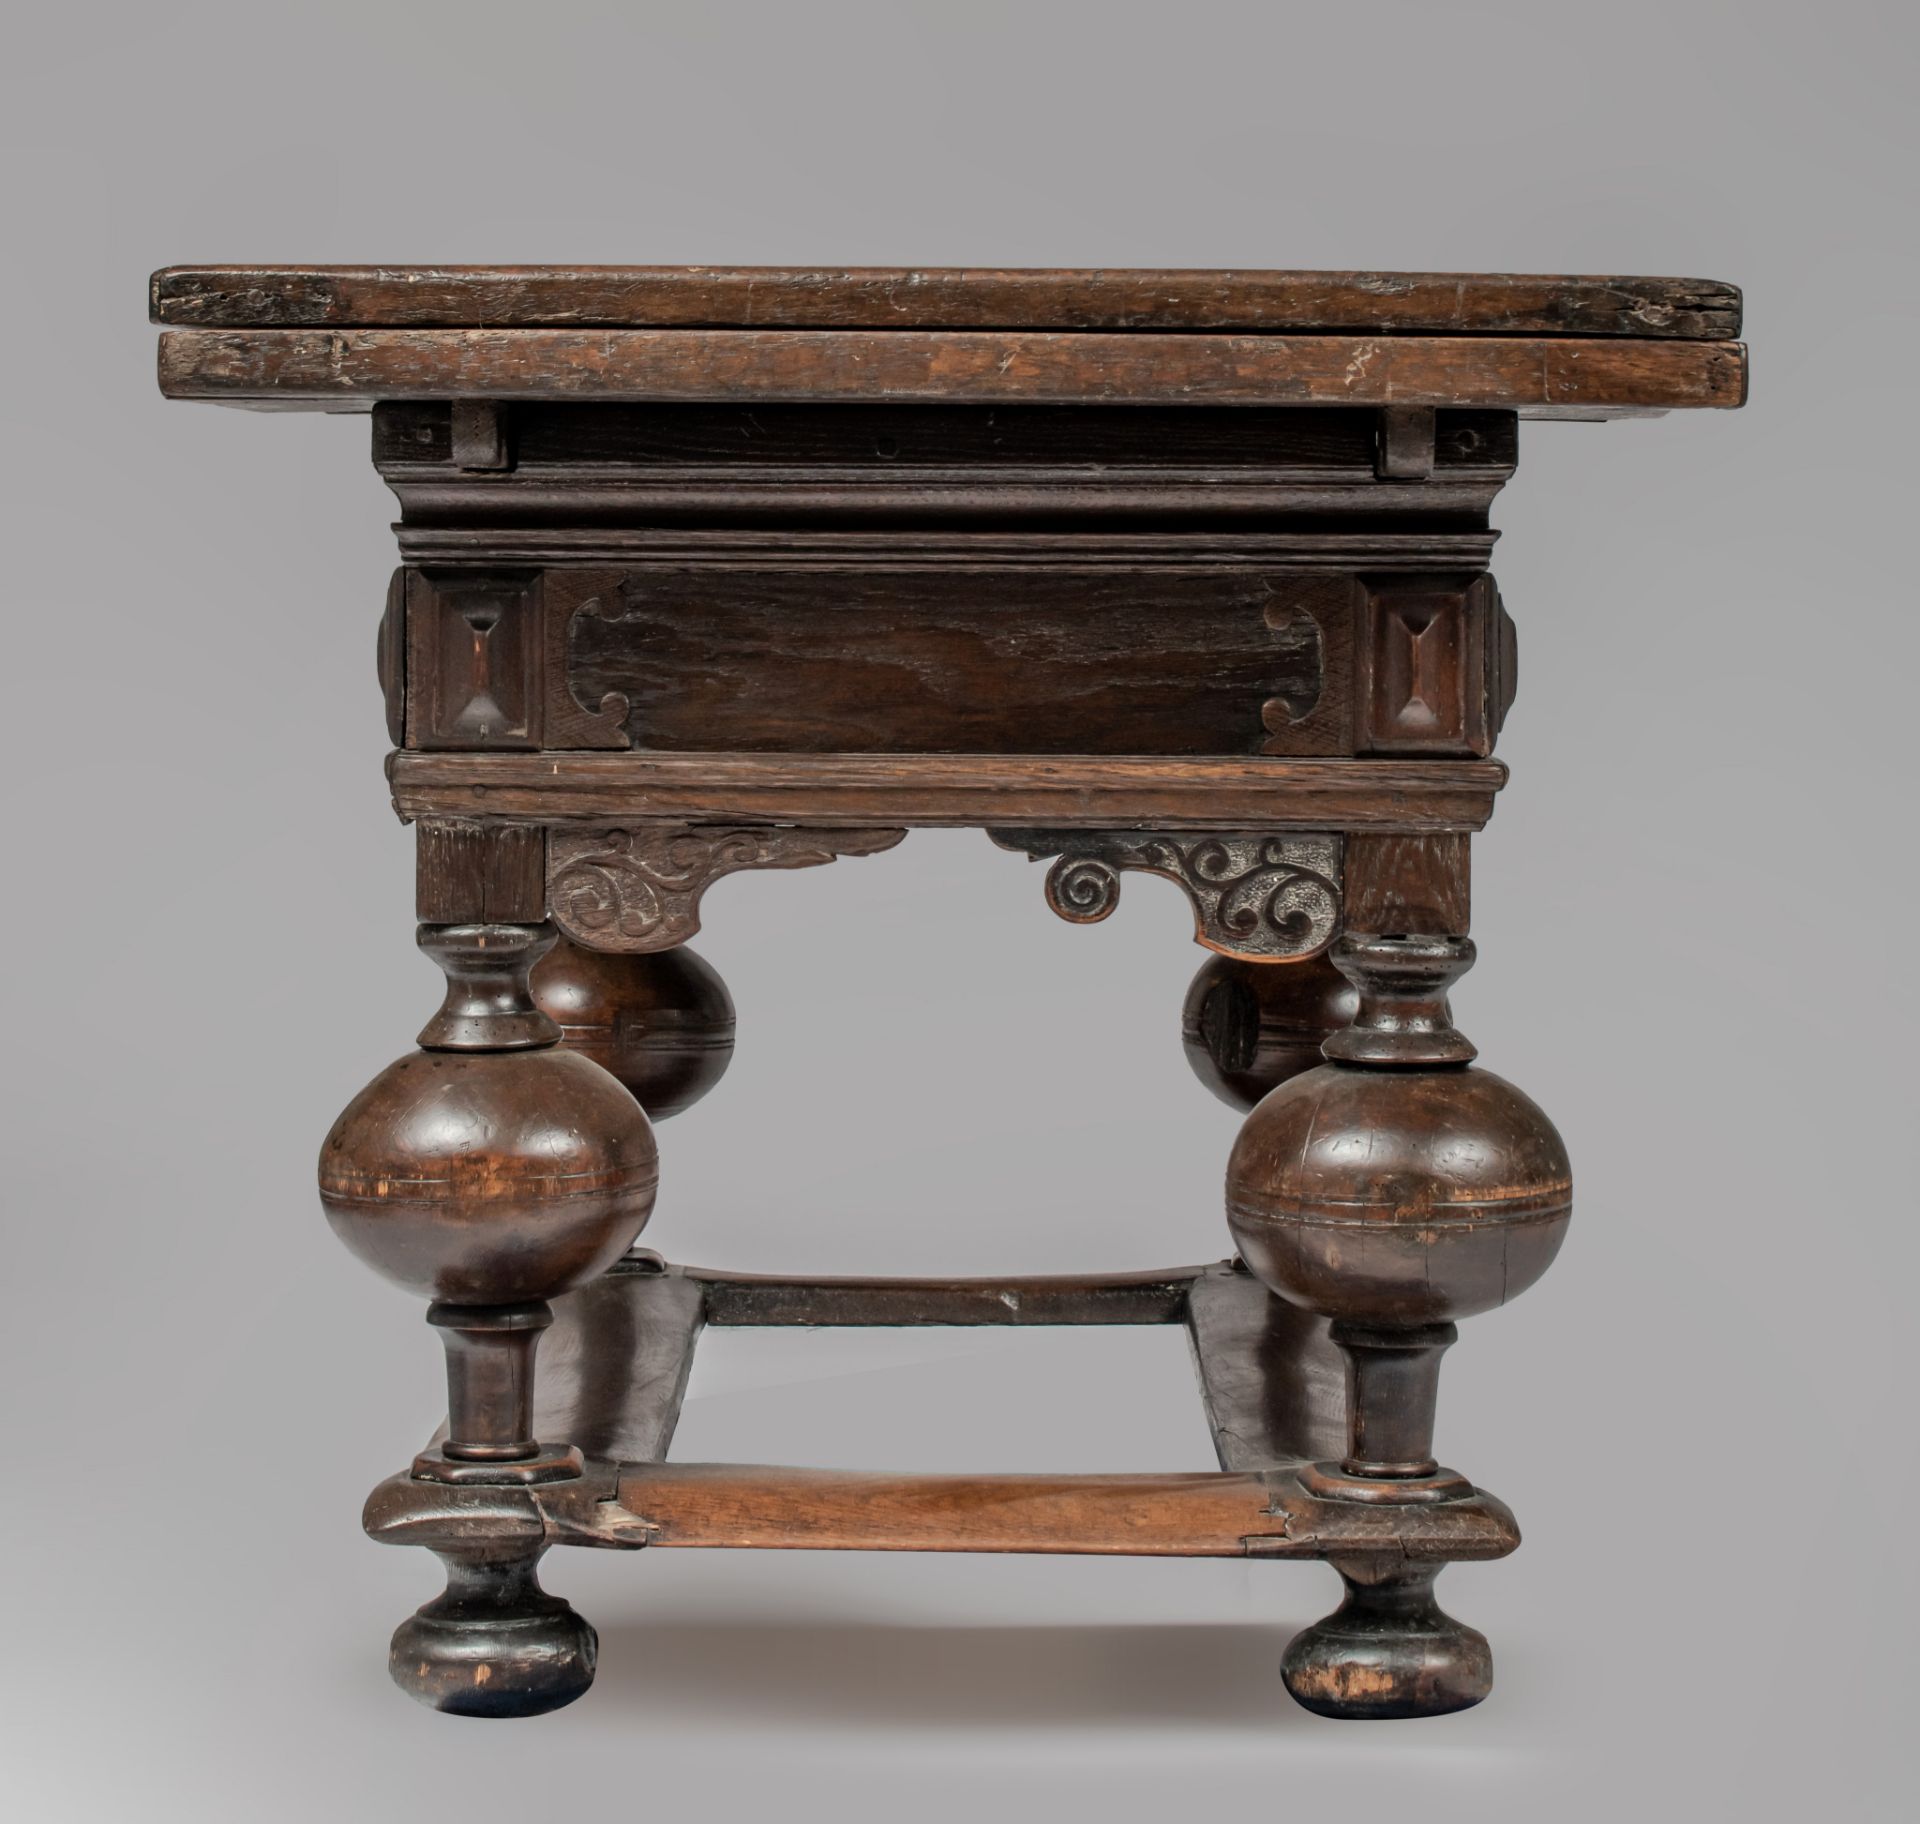 An impressive Flemish or Dutch oak table, early 17thC, H 80 - W 146 - 252 - D 85 cm - Image 5 of 8